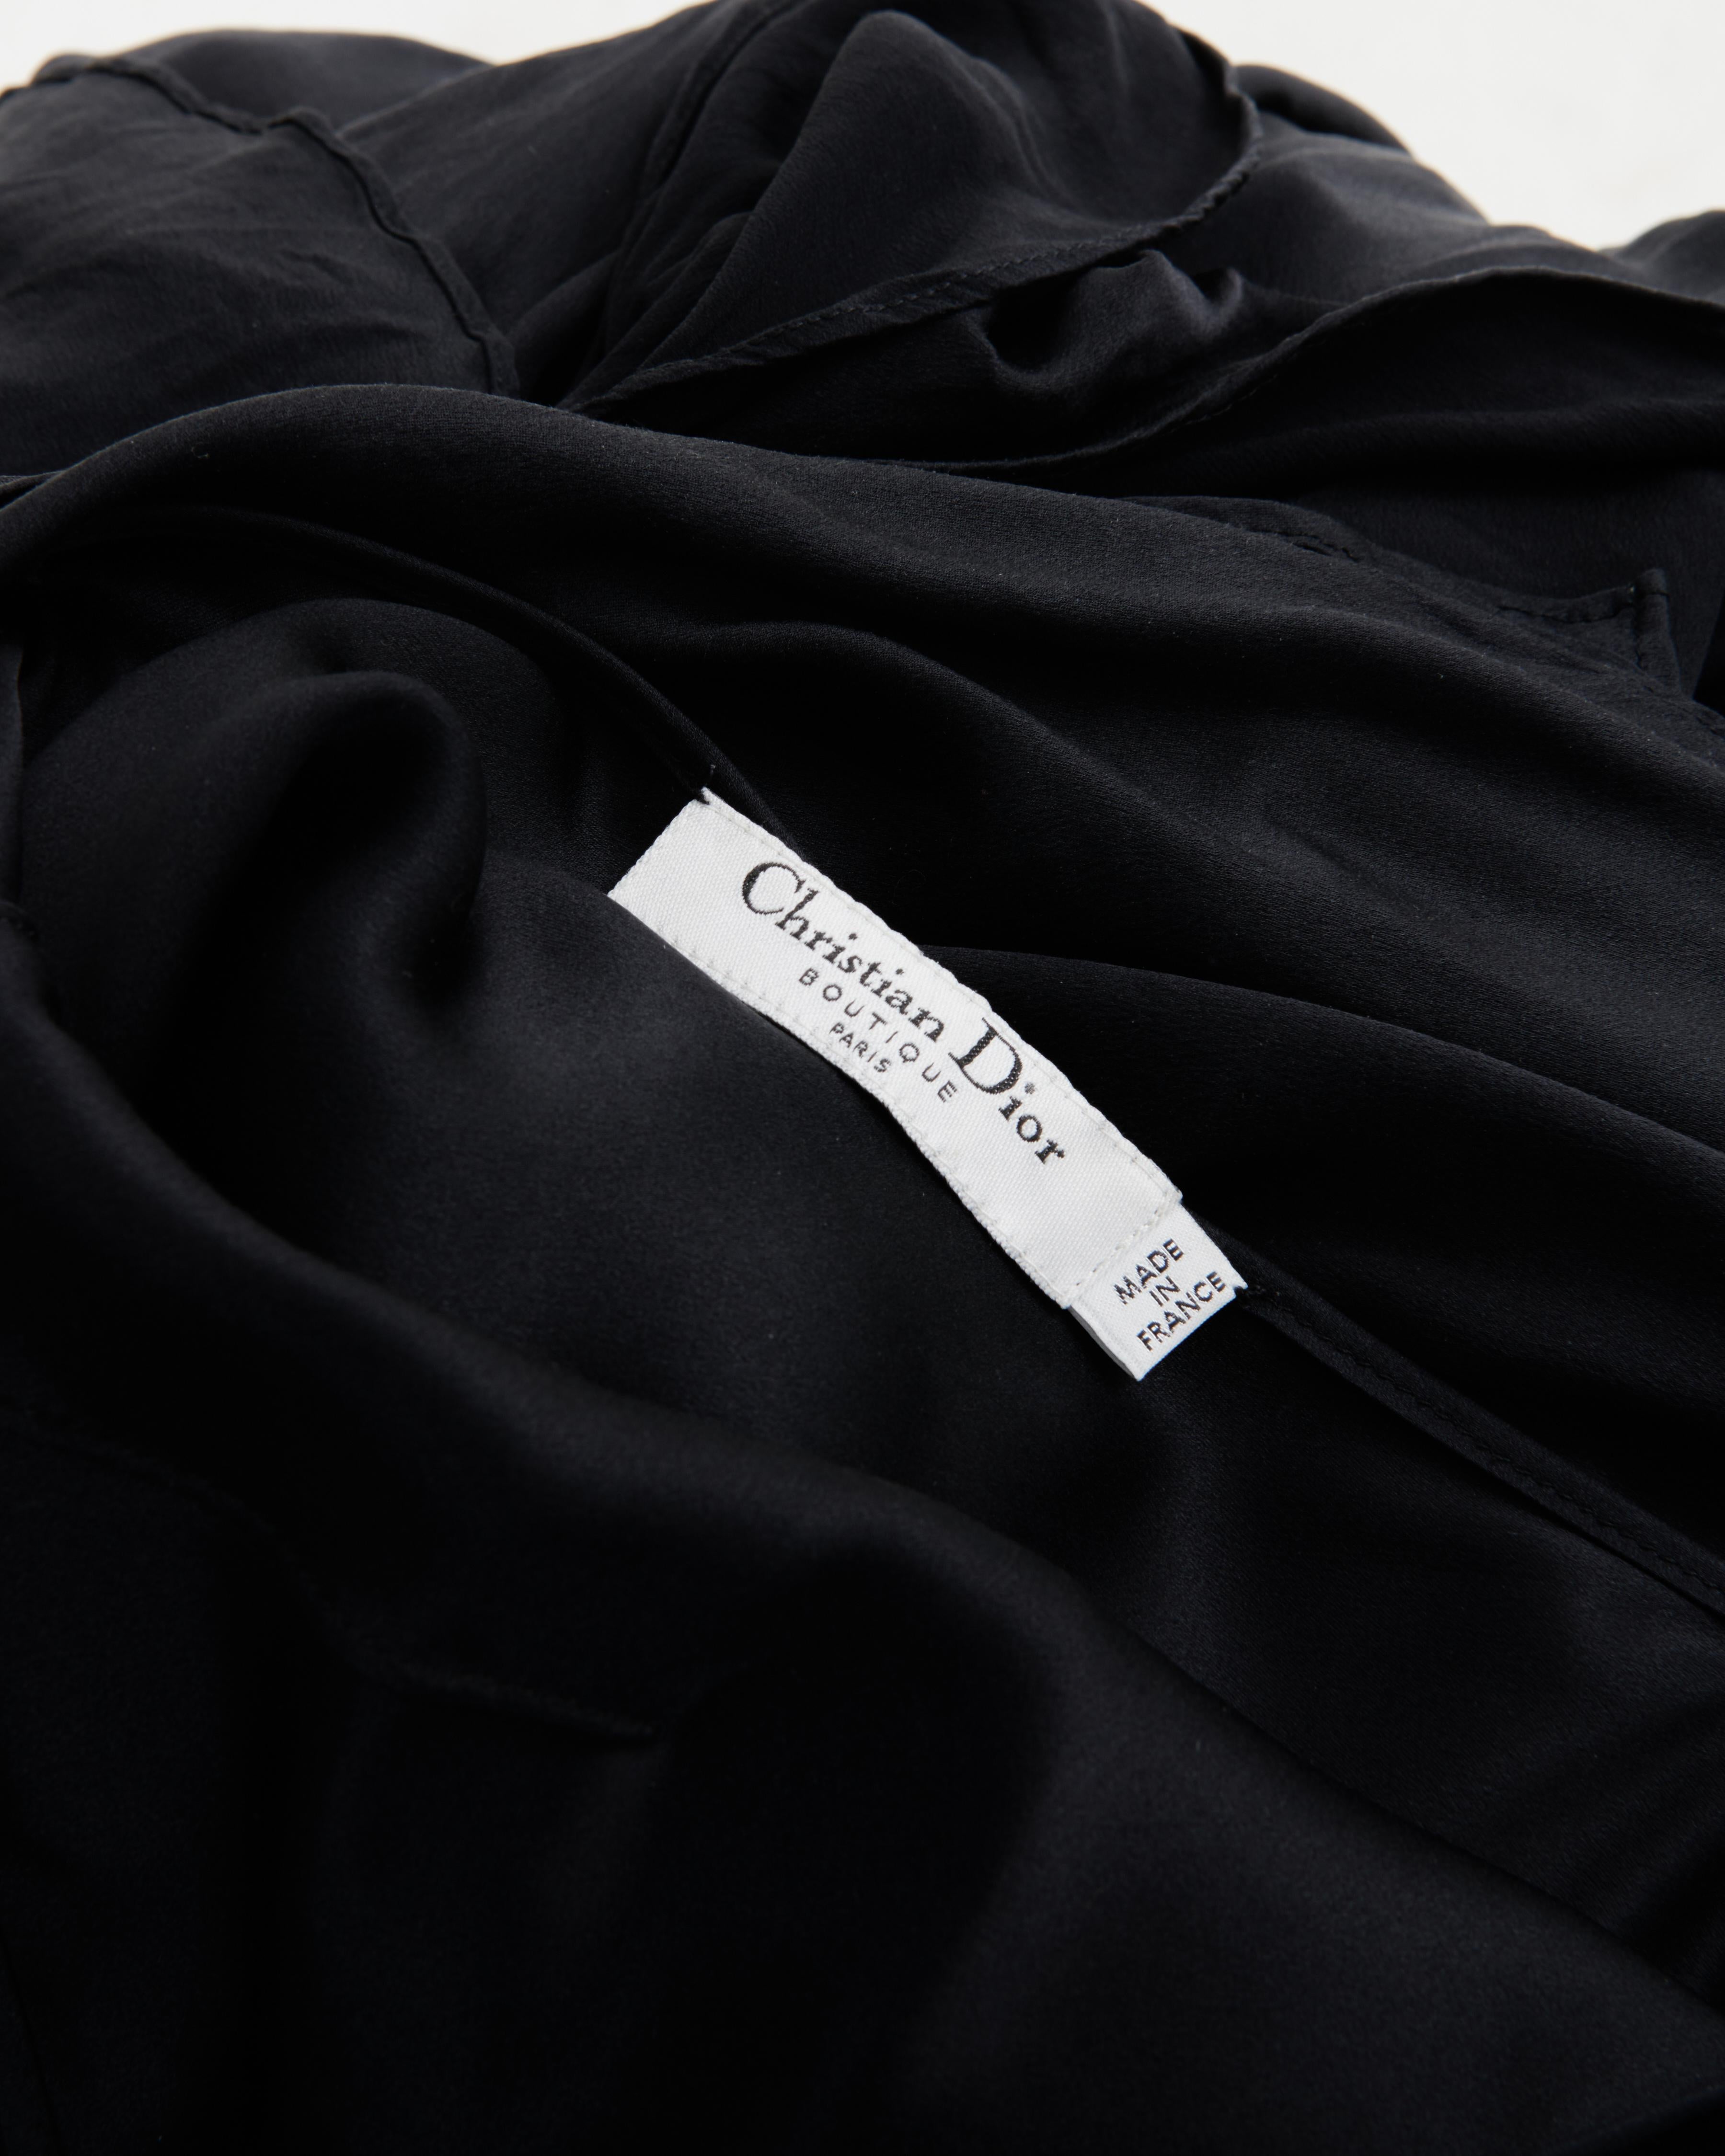 Christian Dior by John Galliano F/W 2006 Black silk bias-cut evening dress 13